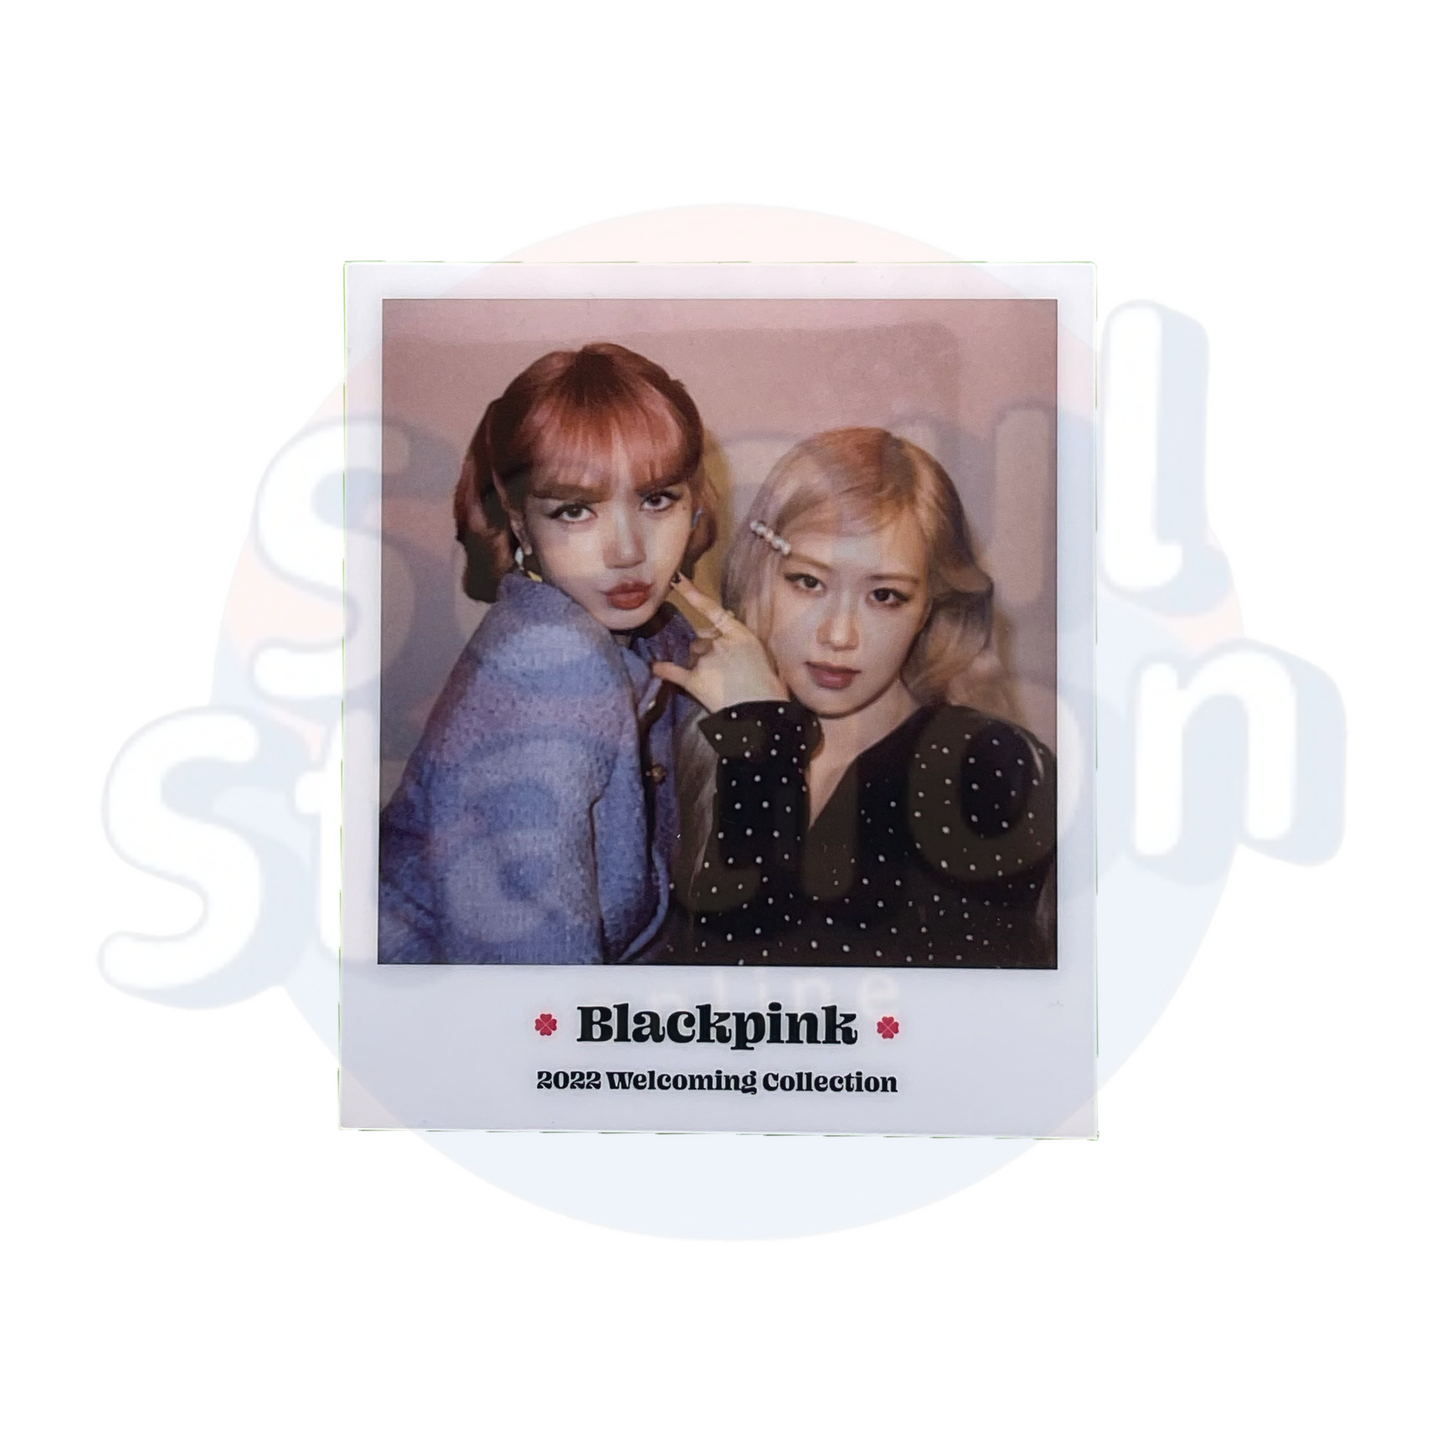 BLACKPINK - 2022 Welcoming Collection - WEVERSE Transparent Unit Polaroid Set